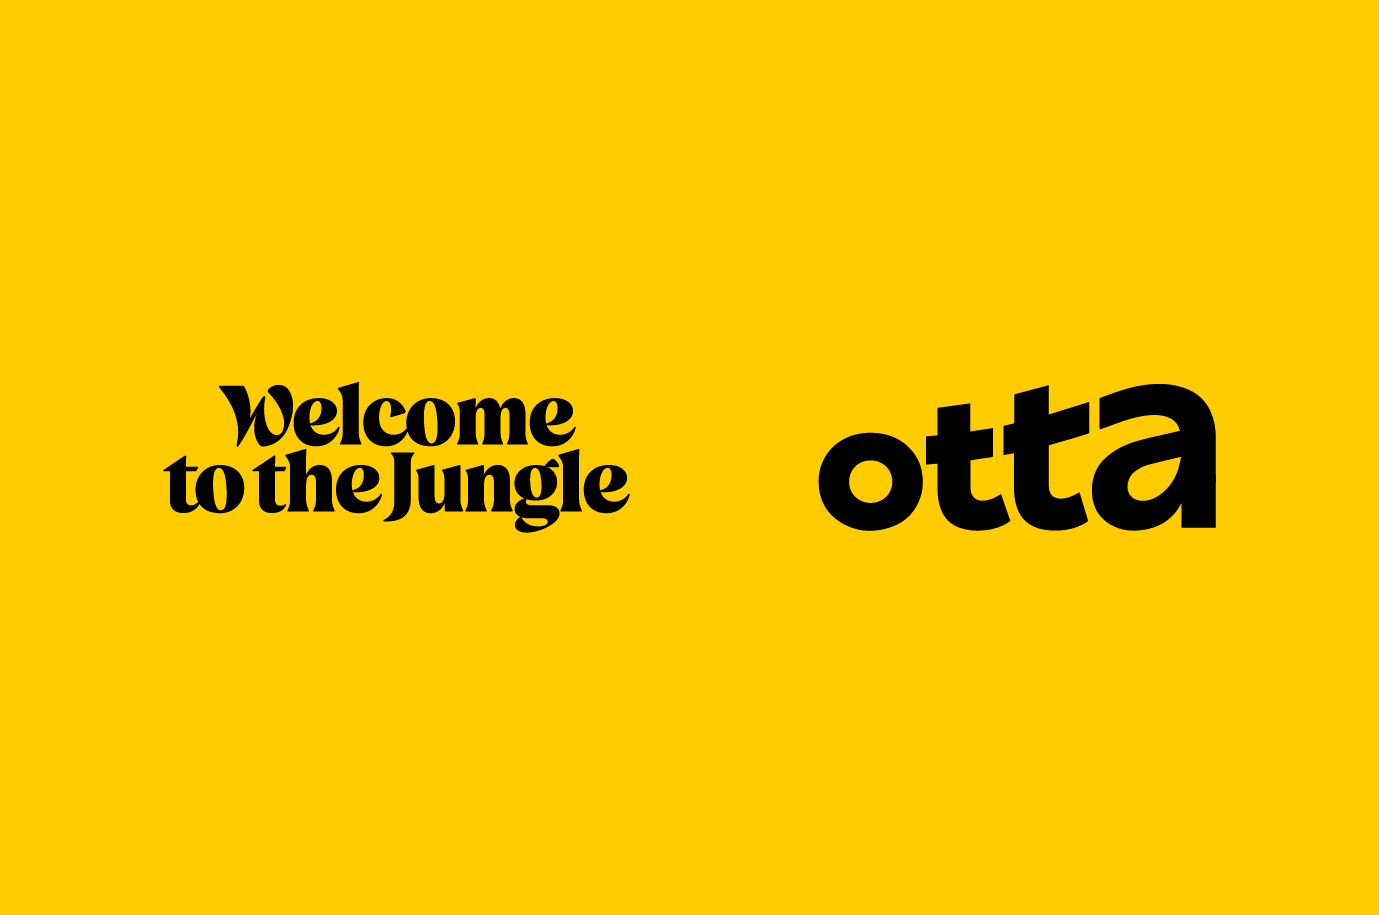 Welcome to the Jungle - Otta